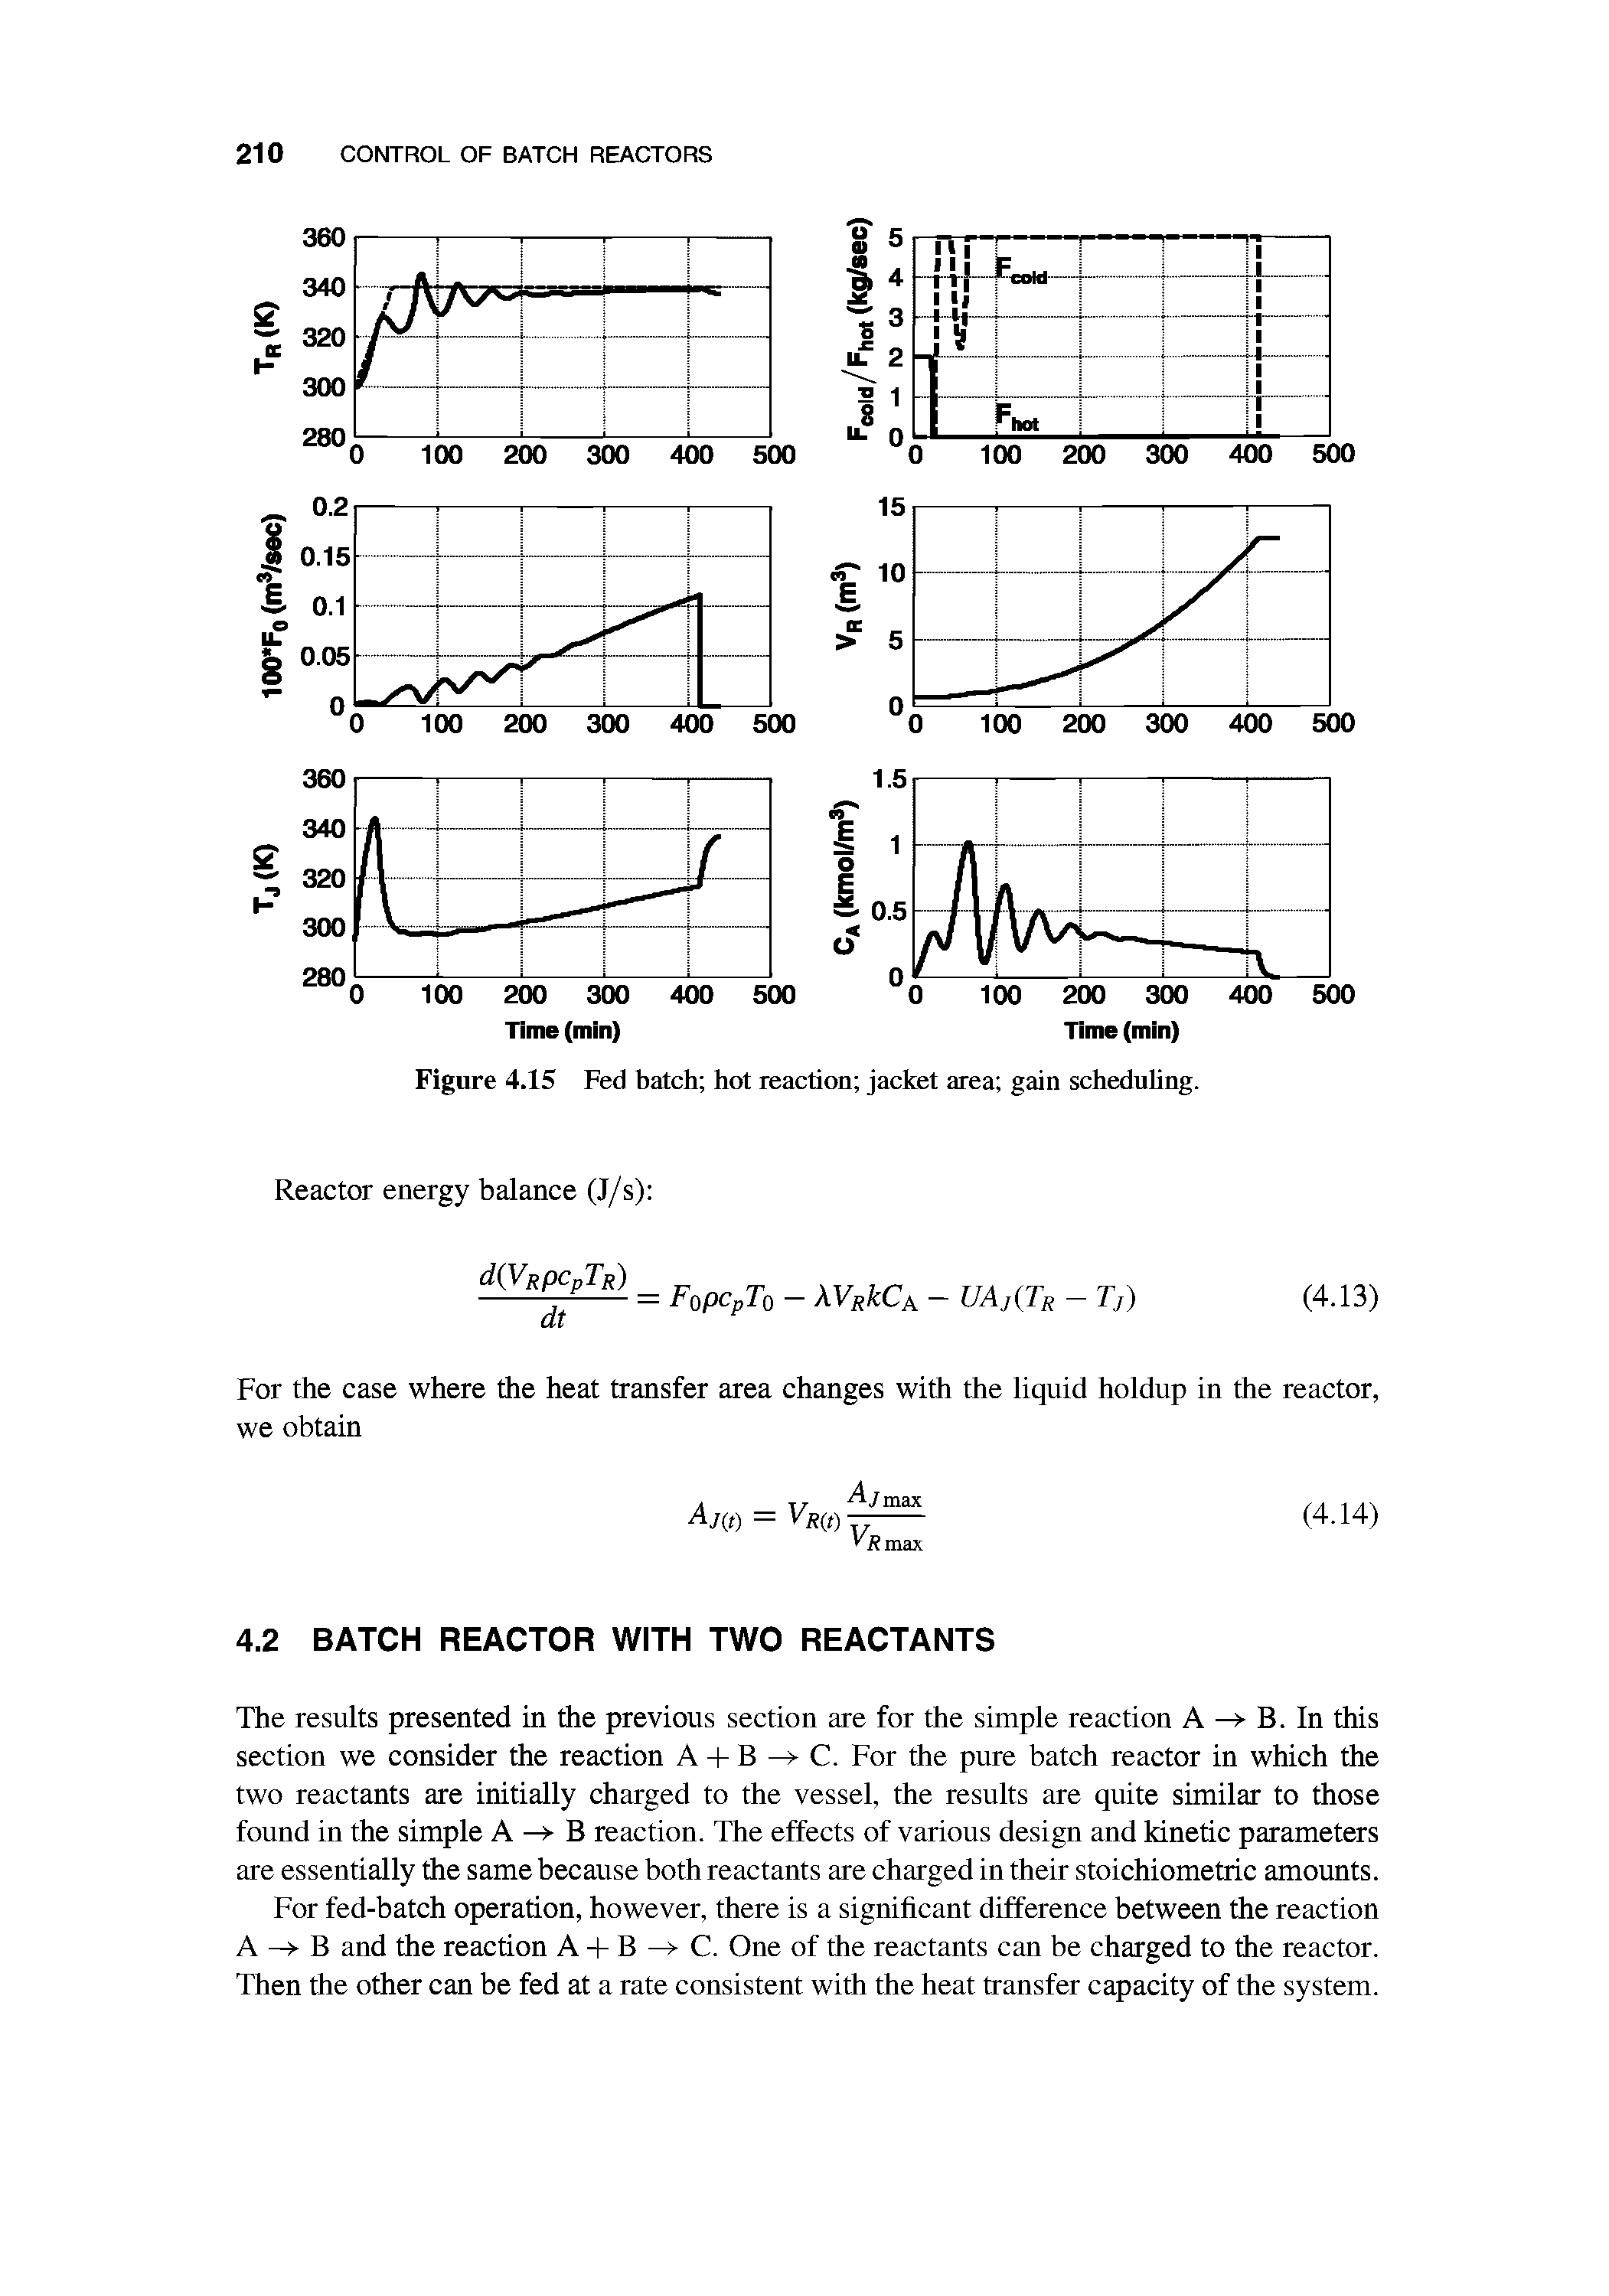 Figure 4.15 Fed batch hot reaction jacket area gain scheduling.